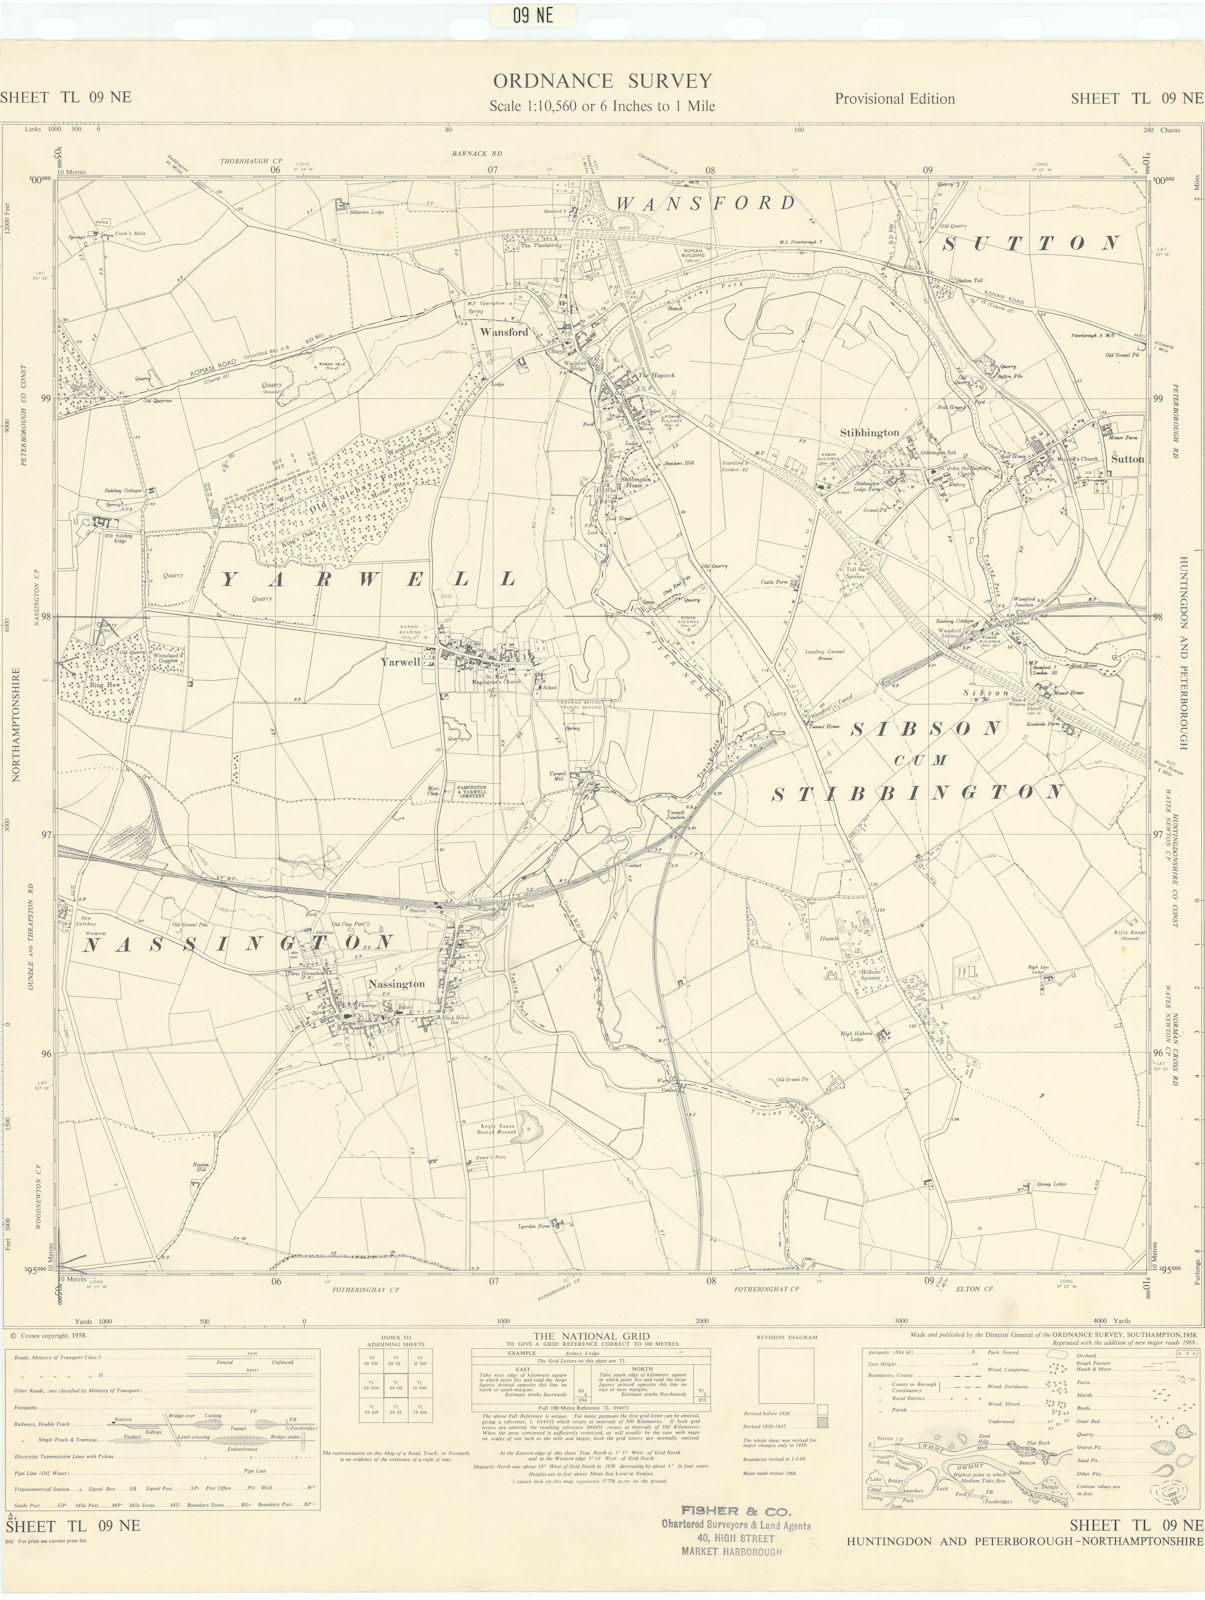 Ordnance Survey TL09NE Northants/Cambs Yarwell Nassington Wansford 1969 map